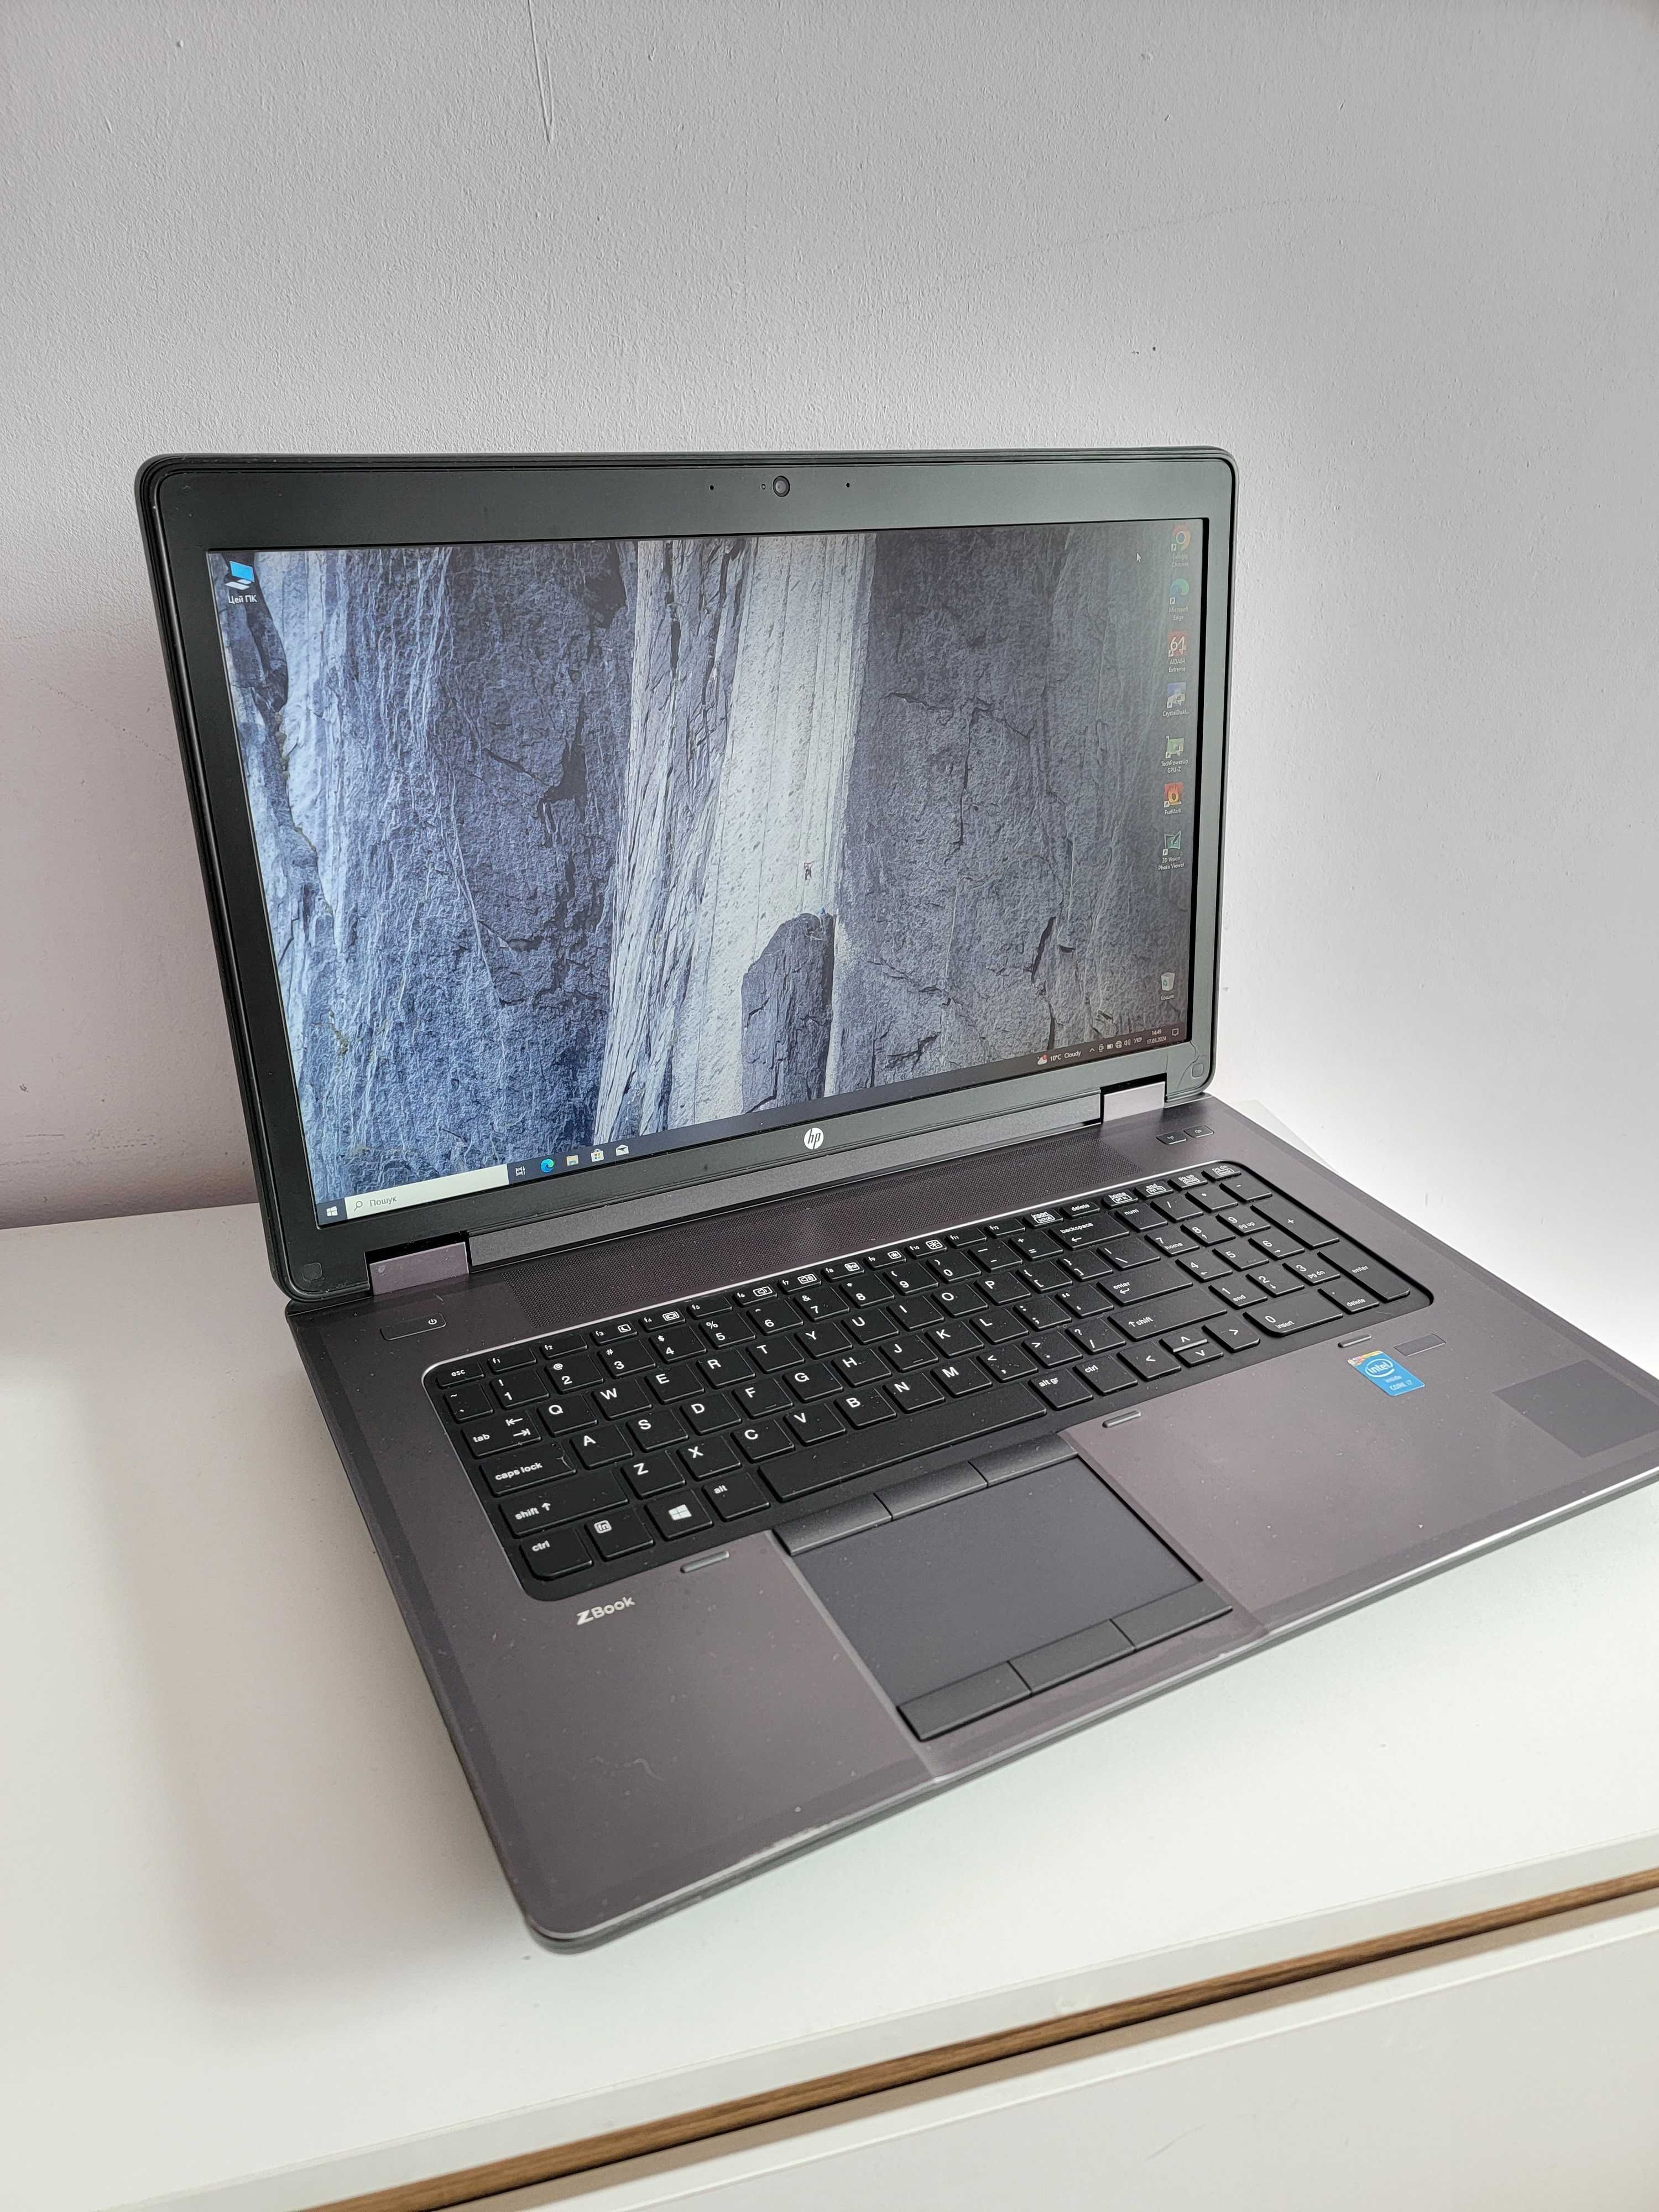 HP ZBook G1 17 (i7-4700MQ/16GB/SSD128/Quadro K610M/17.3/FHD